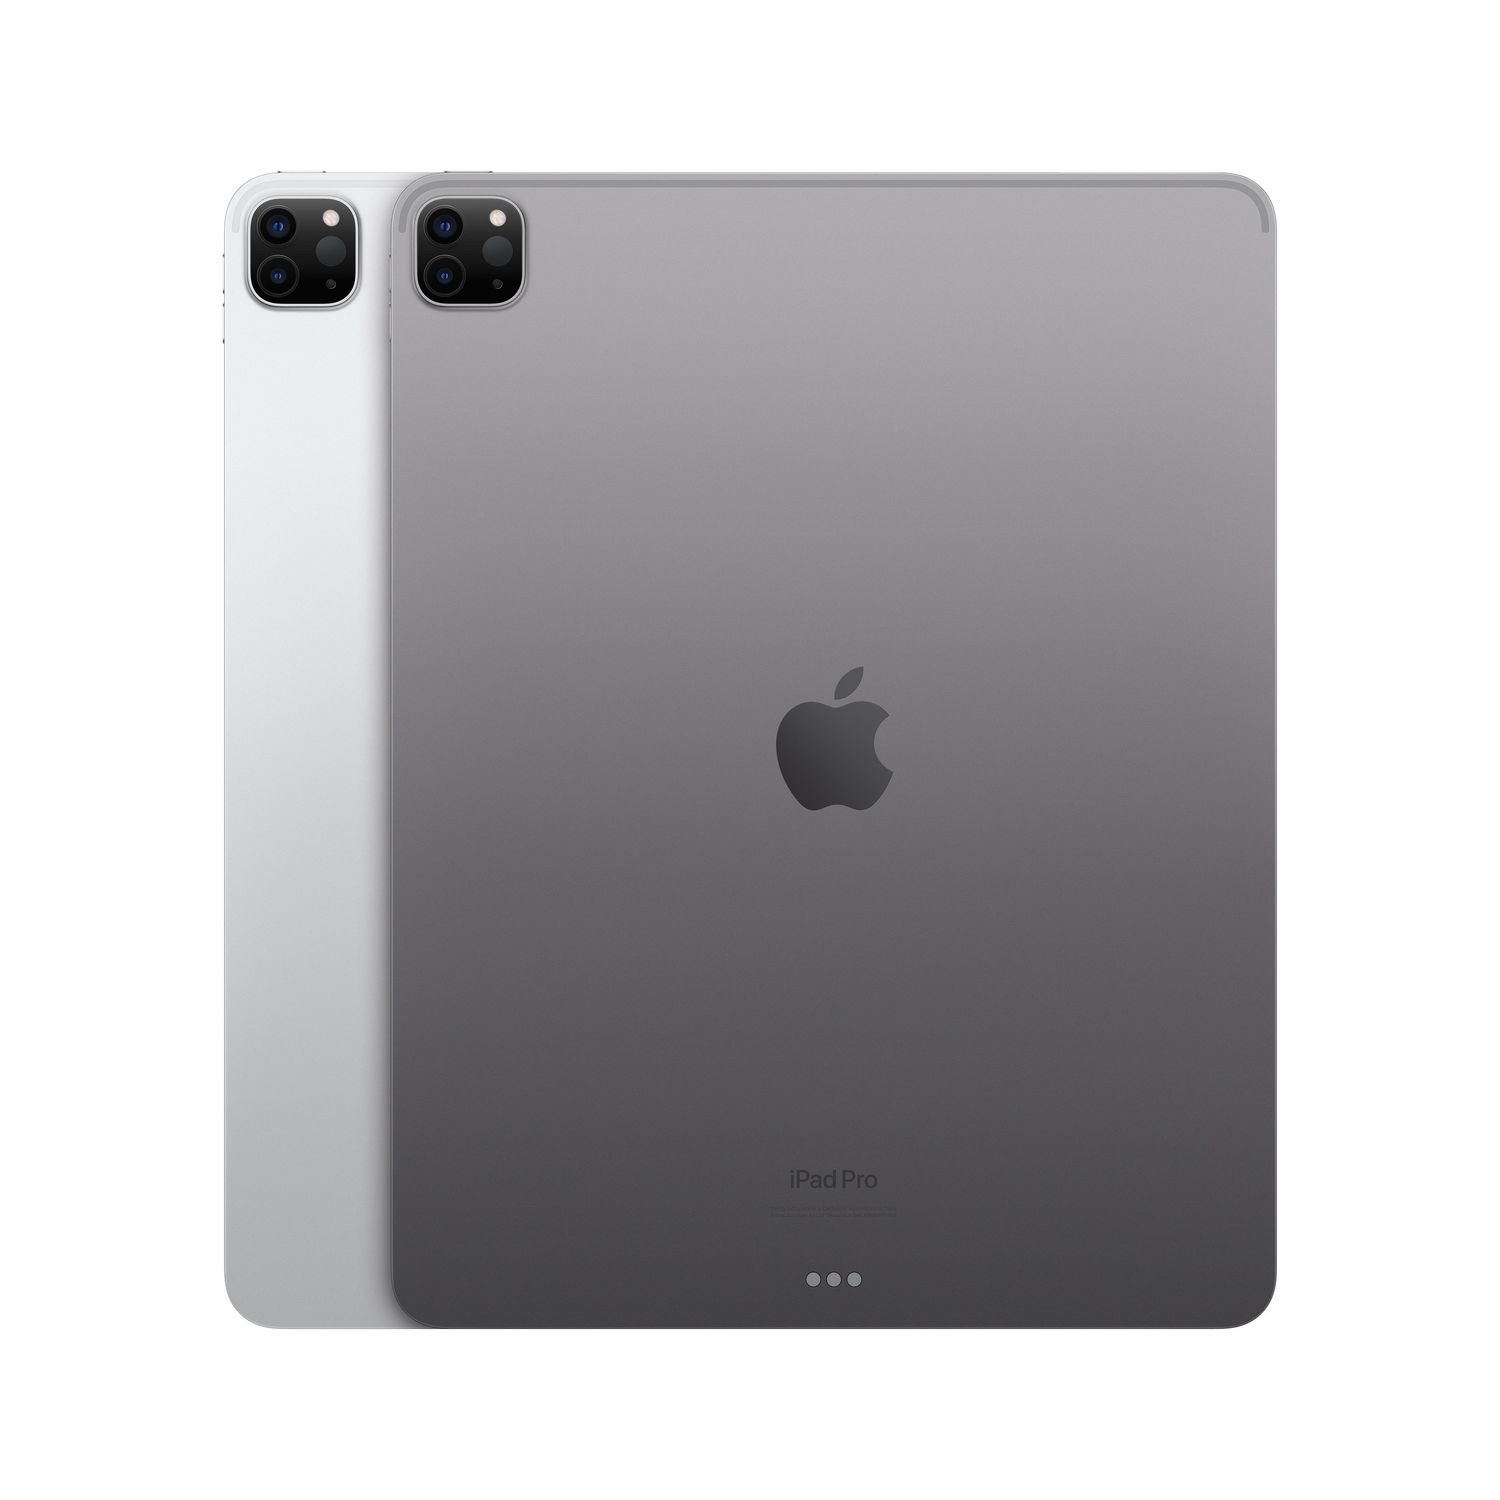 iPad Pro 12.9-inch Space Grey 256g Wi-Fi